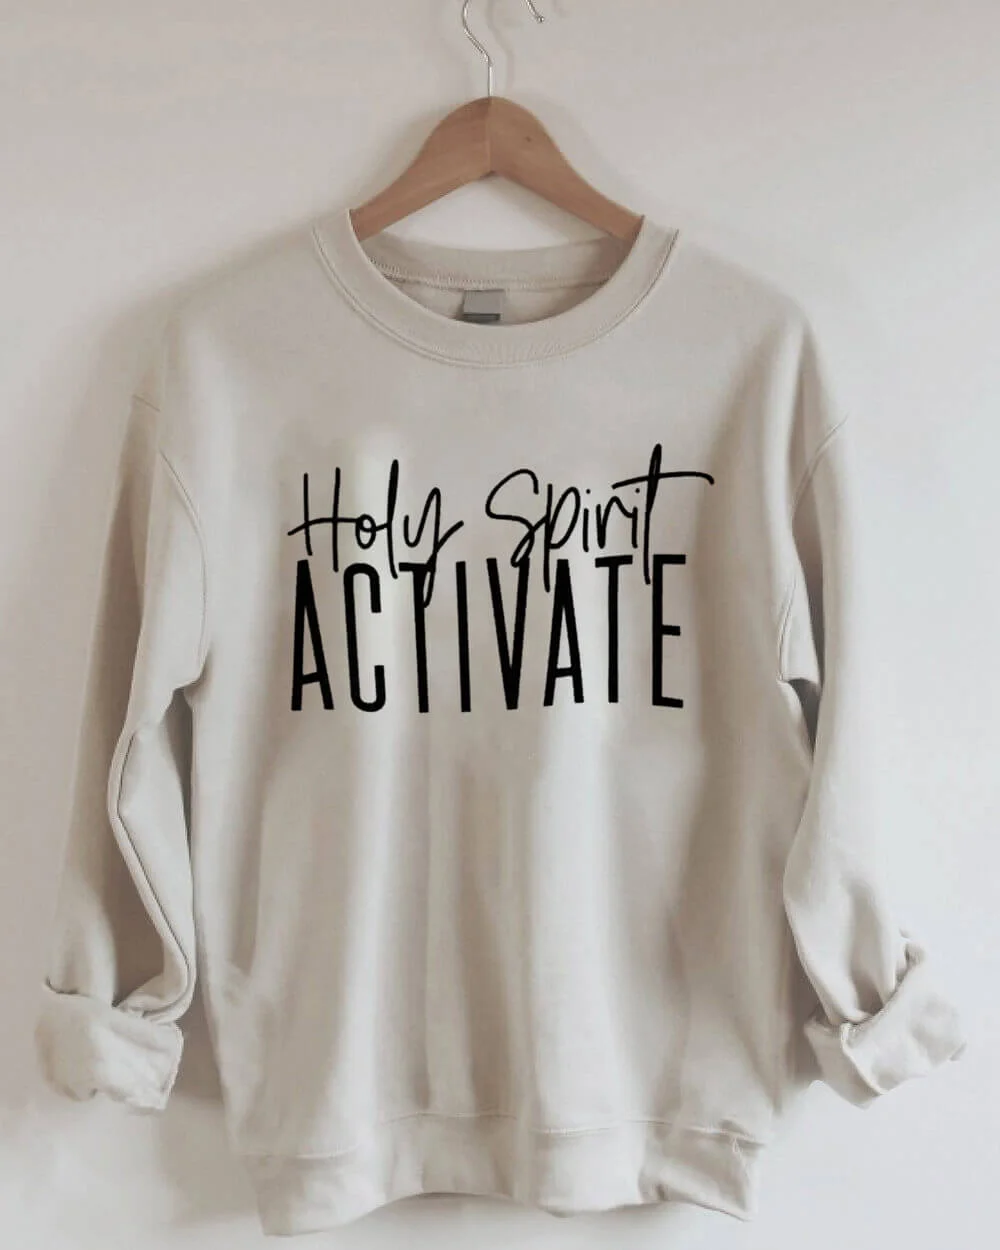 Holy Spirit Activate Sweatshirt